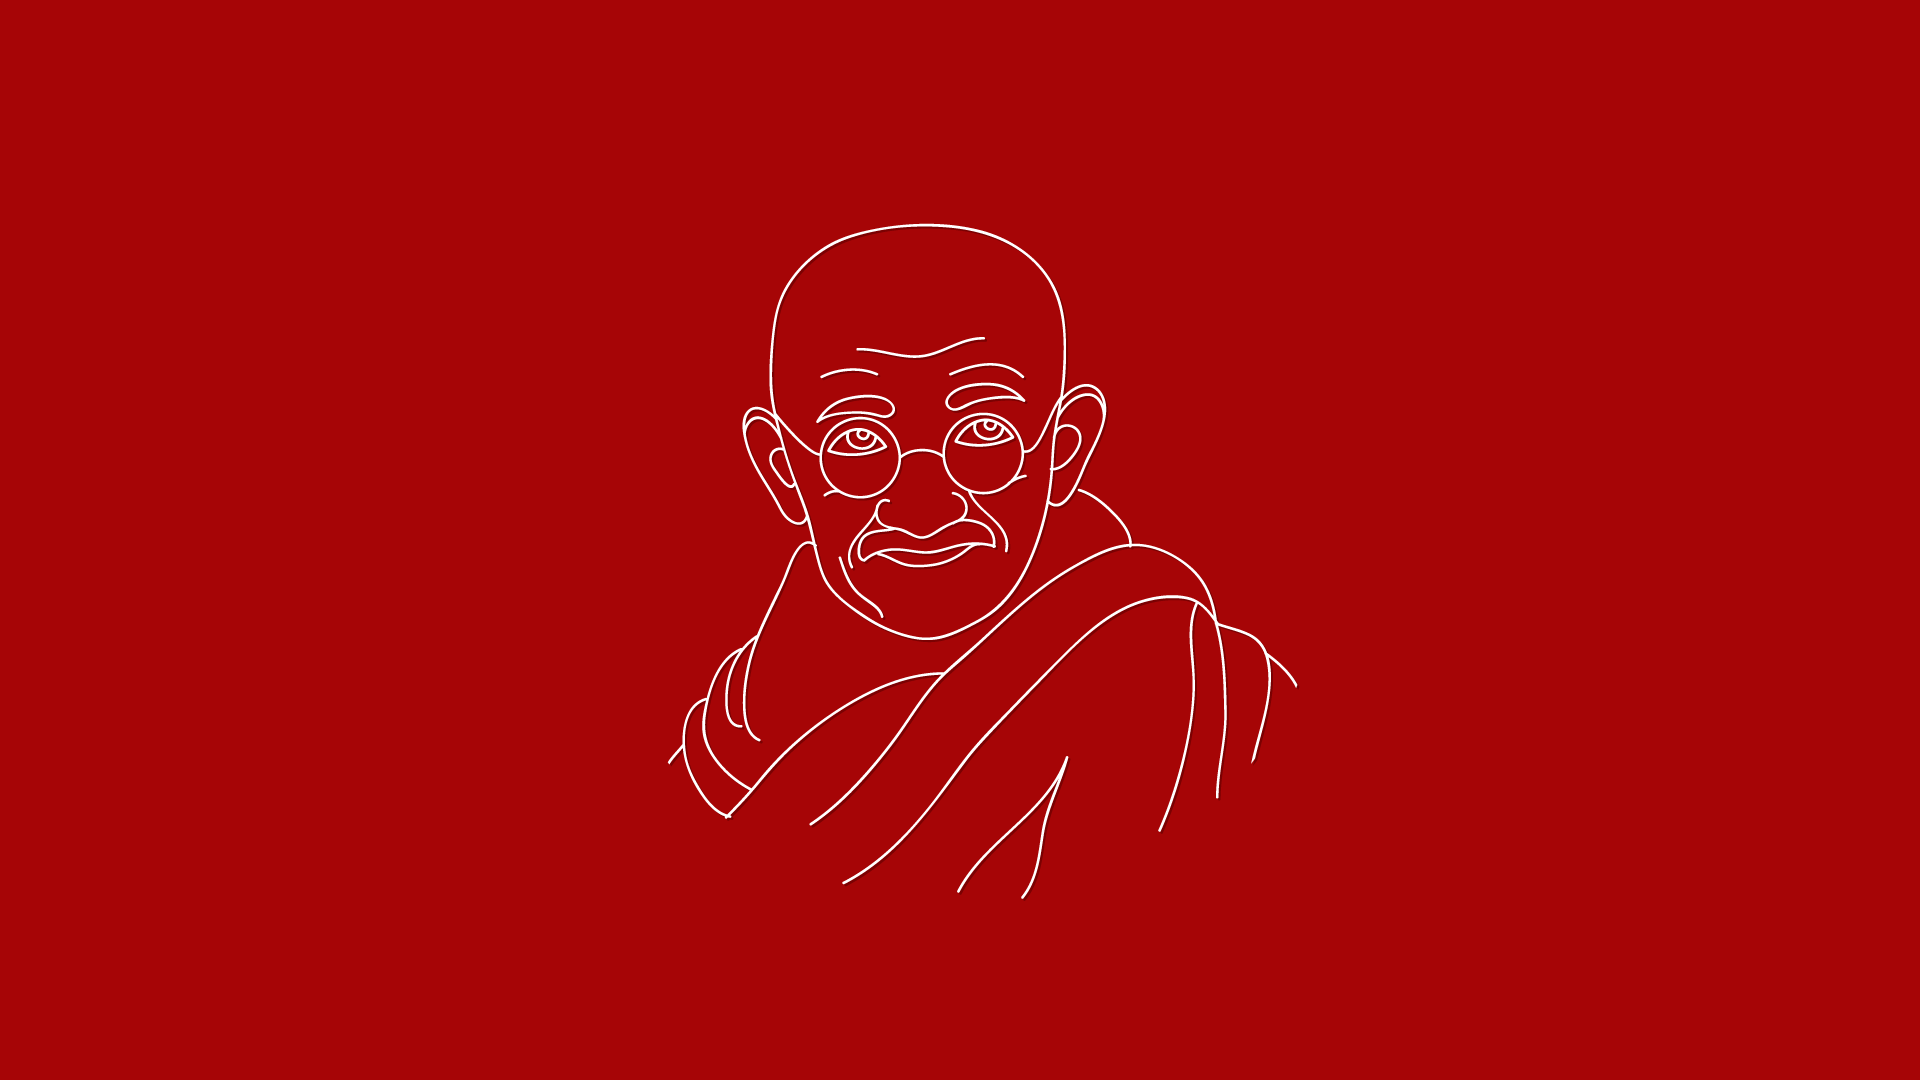 Gandhi – The Master PR Practitioner